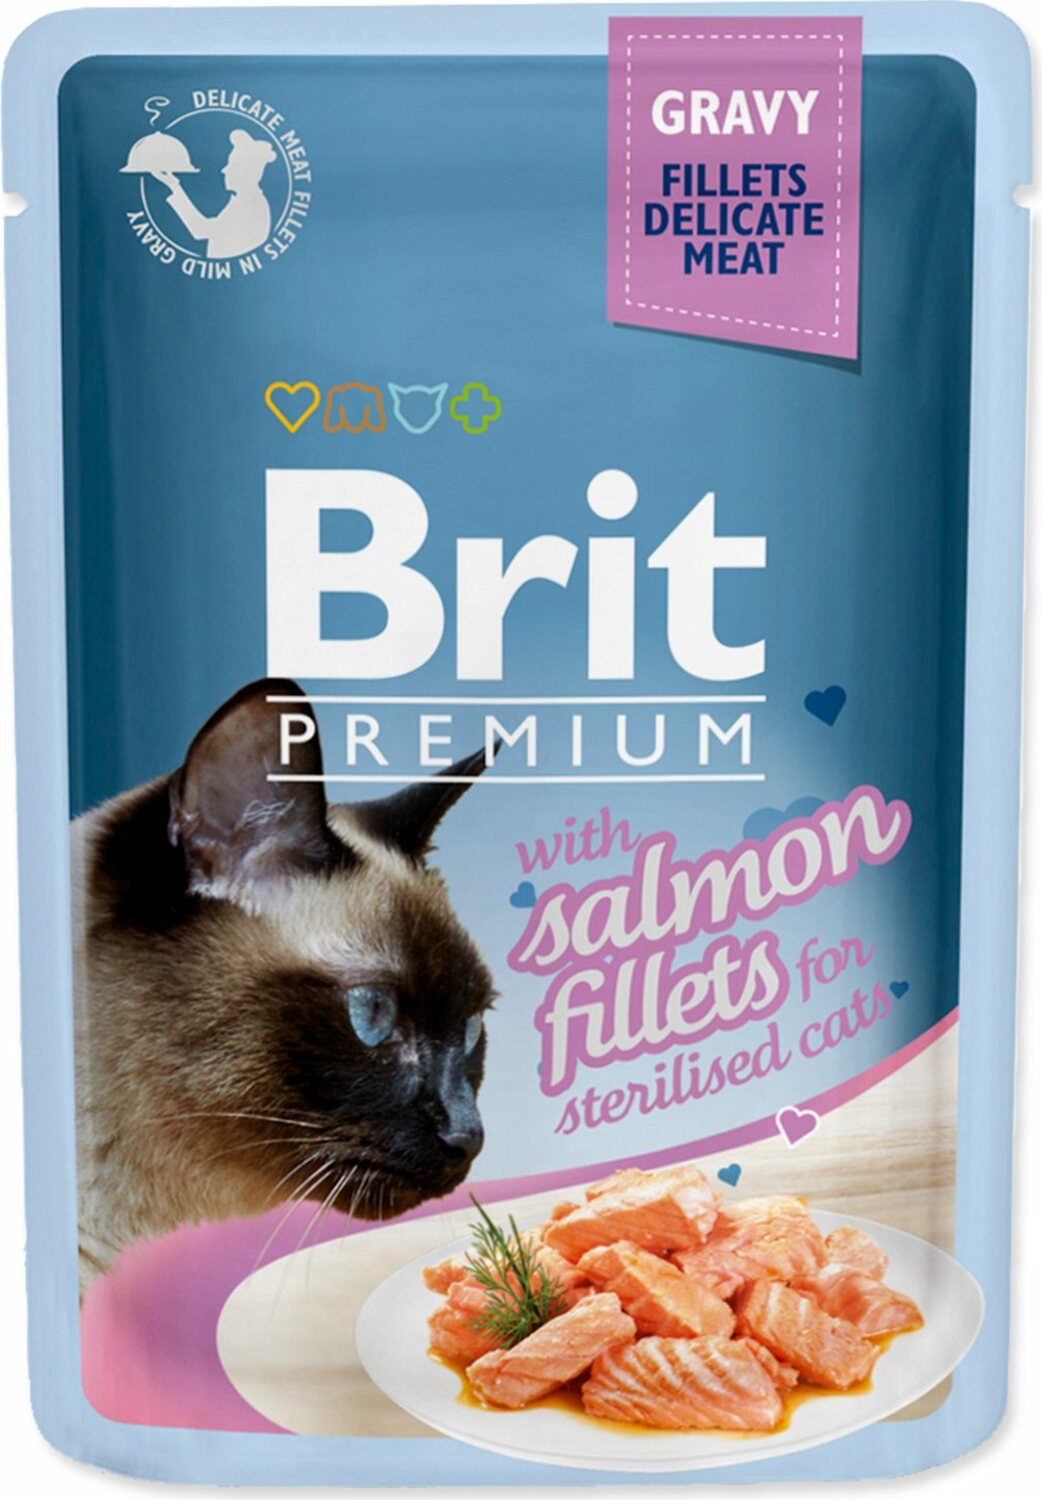 Kapsička Brit Premium Cat Sterilisod losos, filety v omáčce 85g